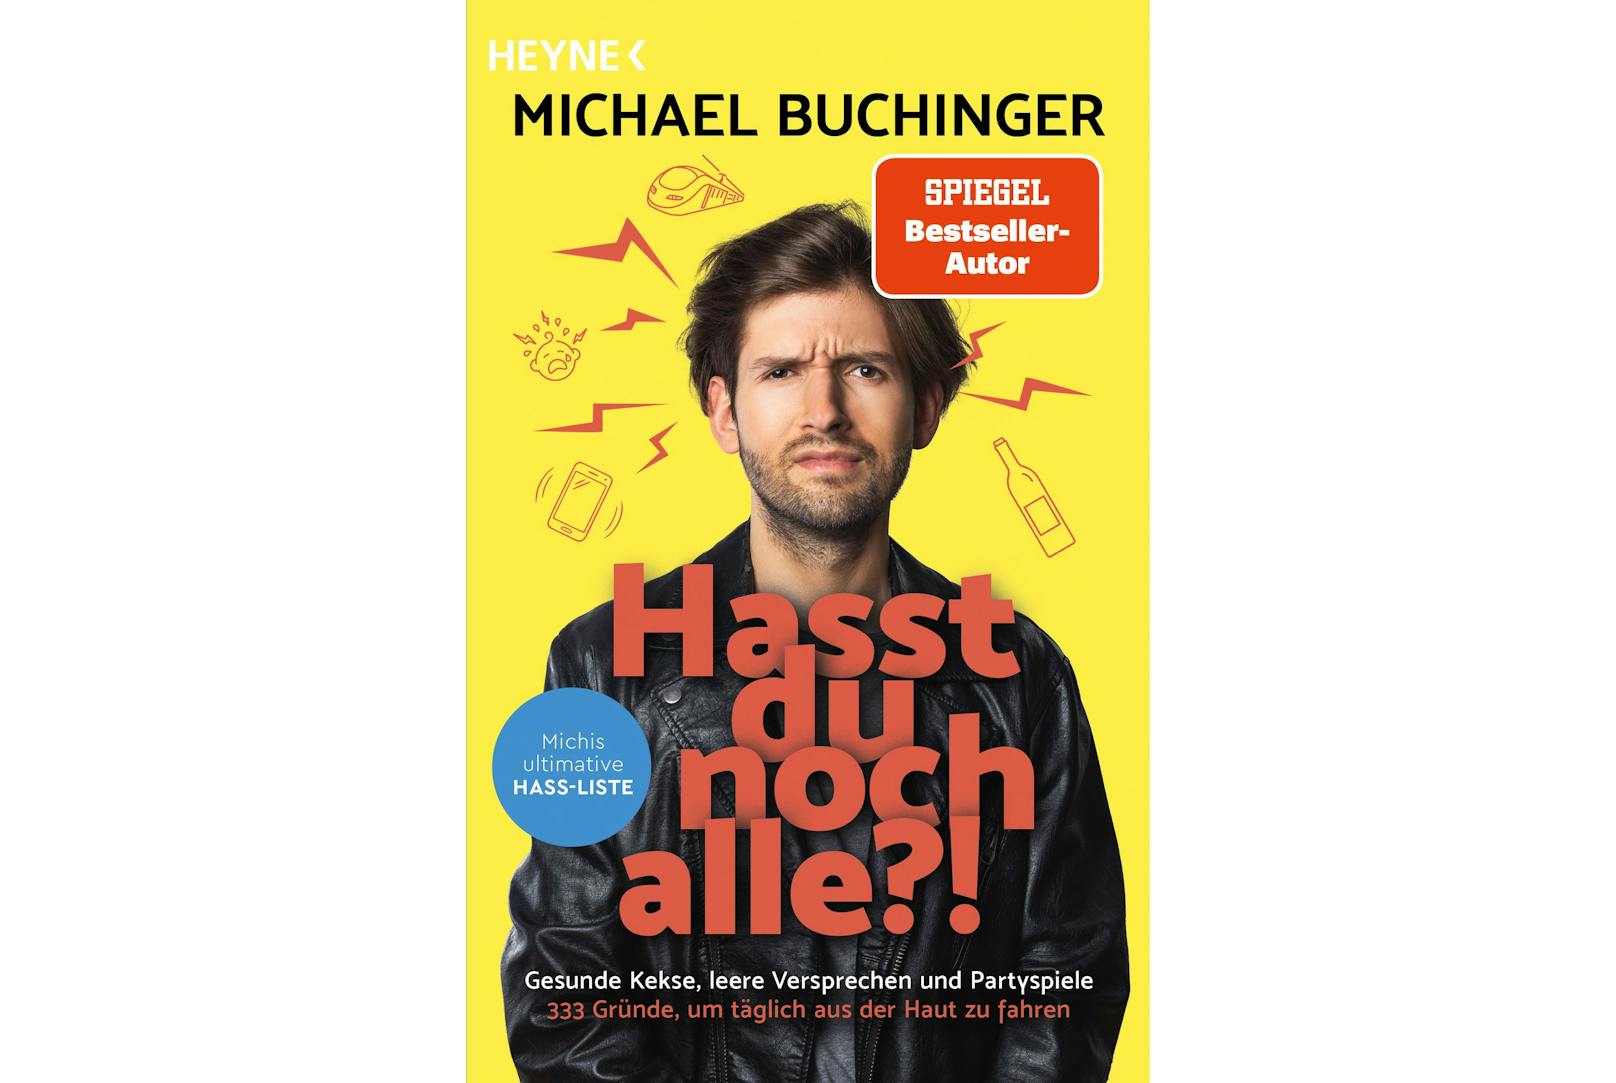 Michael Buchinger – "Hasst du noch alle?!"